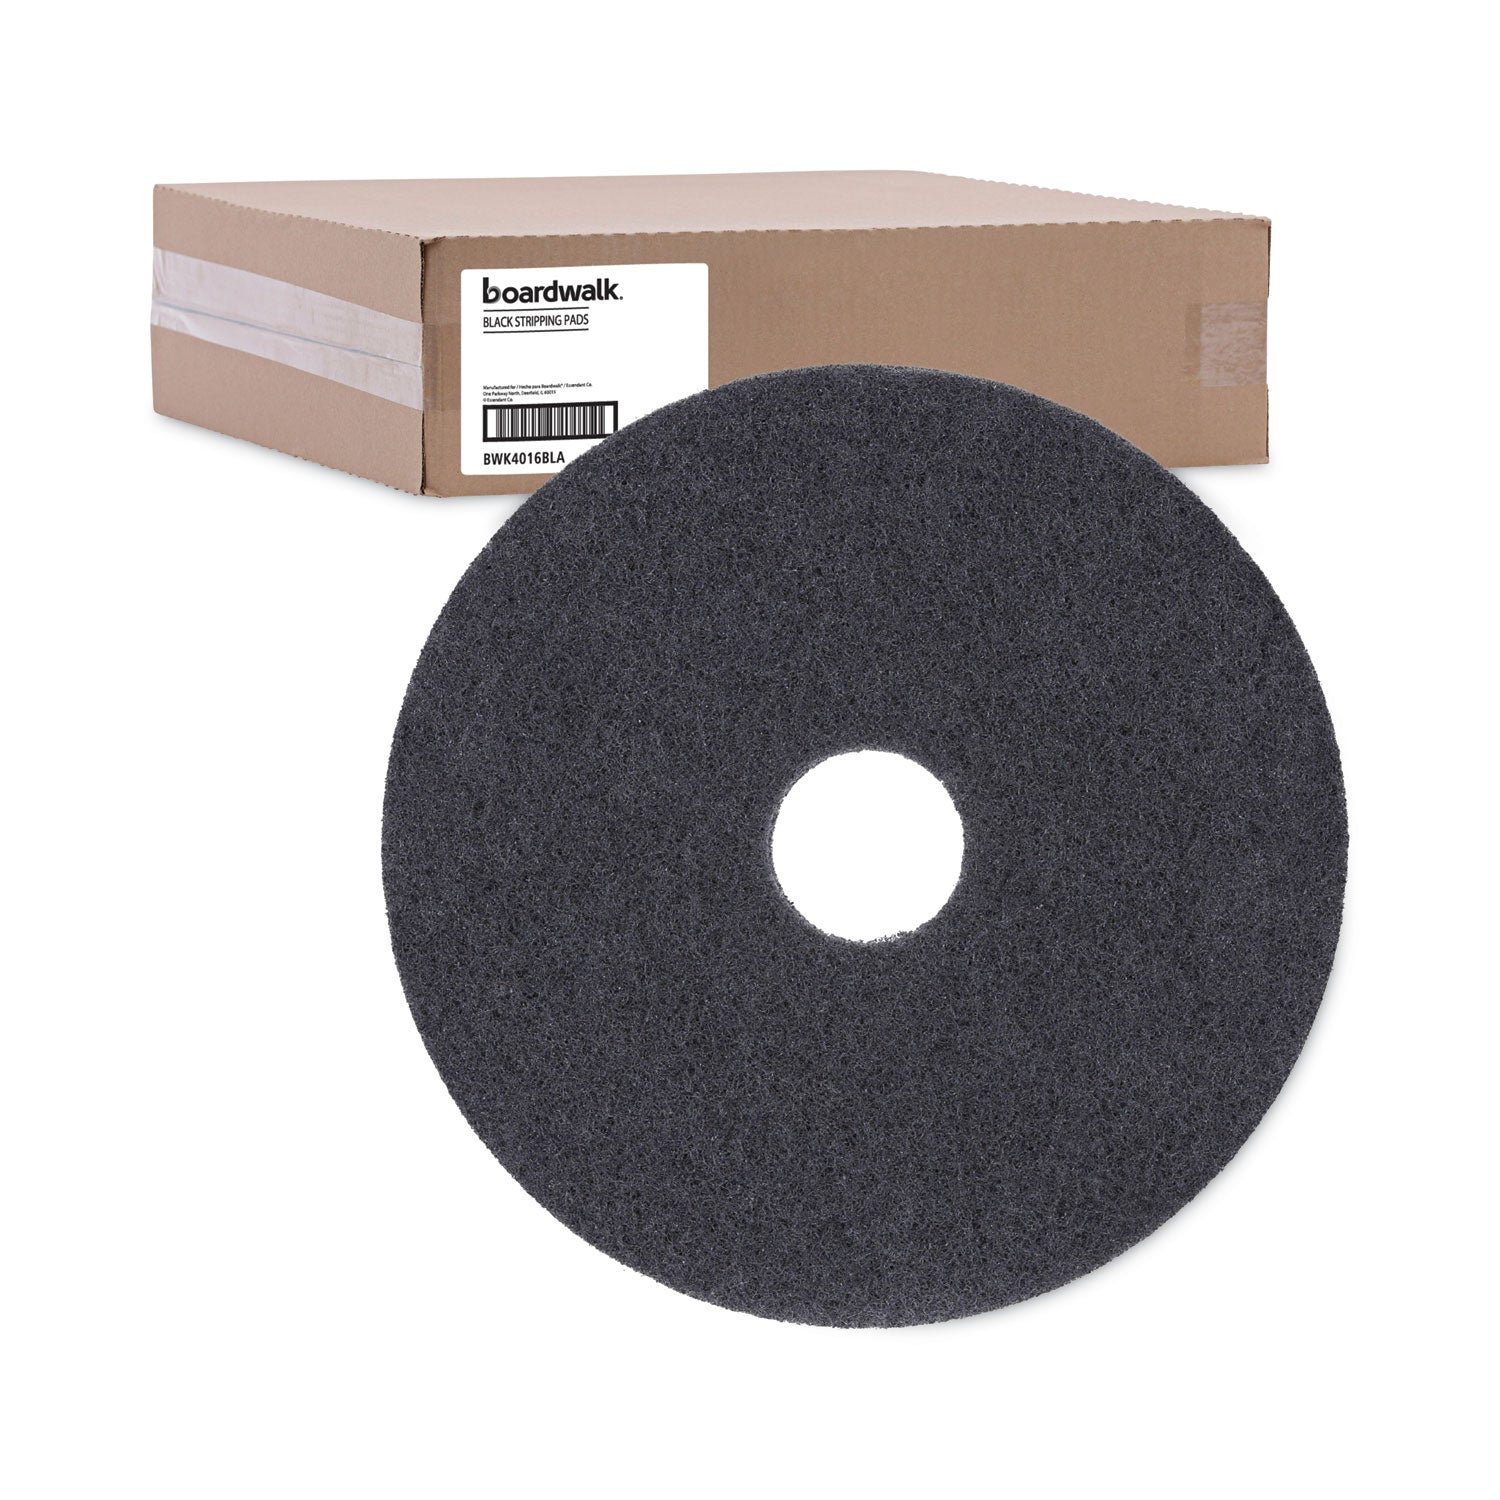 stripping-floor-pads-16-diameter-black-5-carton_bwk4016bla - 5